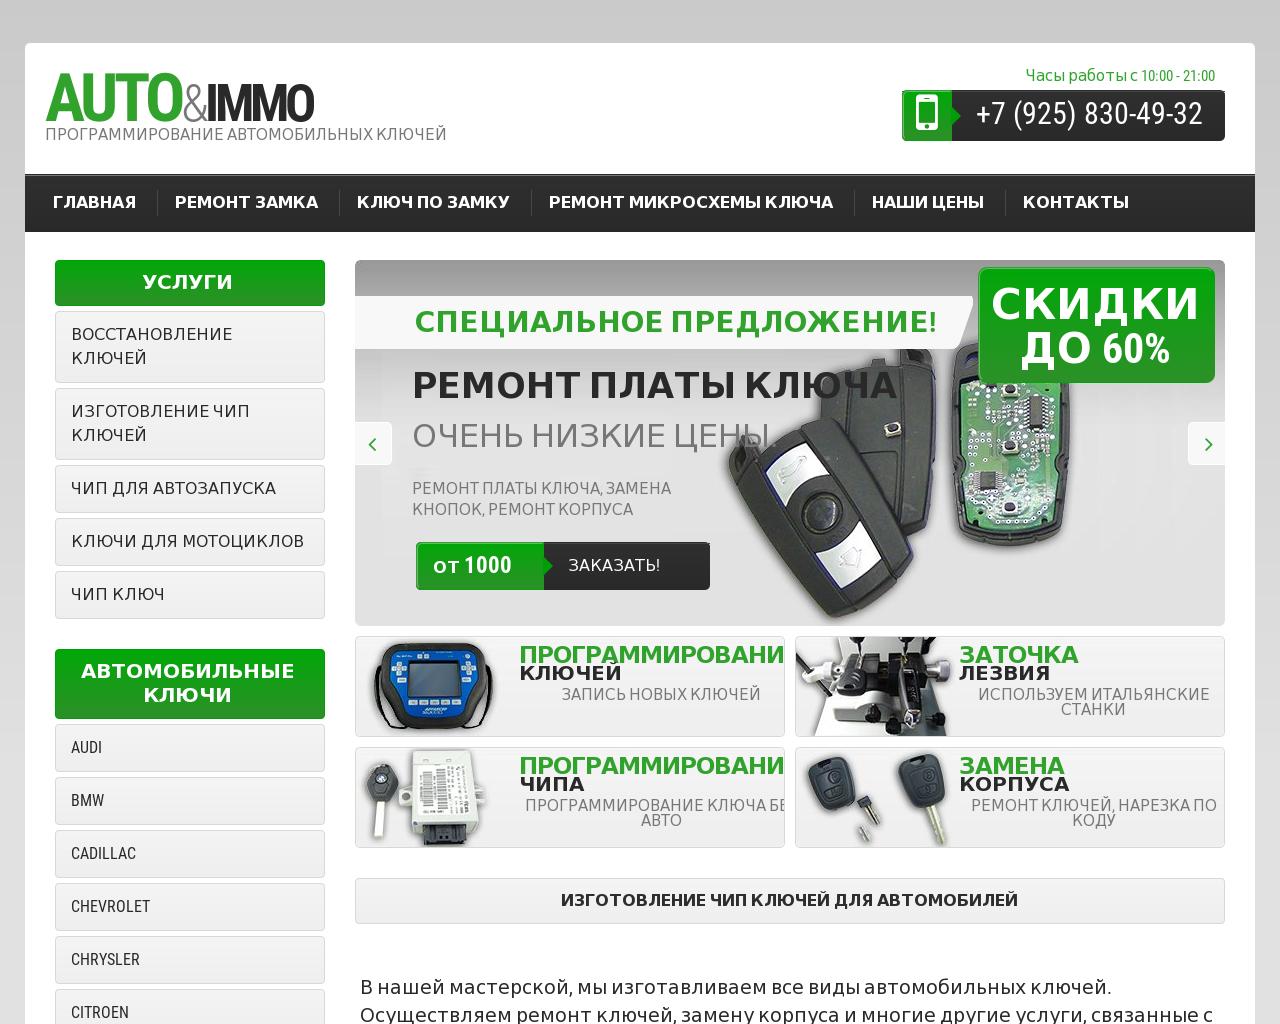 Изображение сайта auto-immo.ru в разрешении 1280x1024